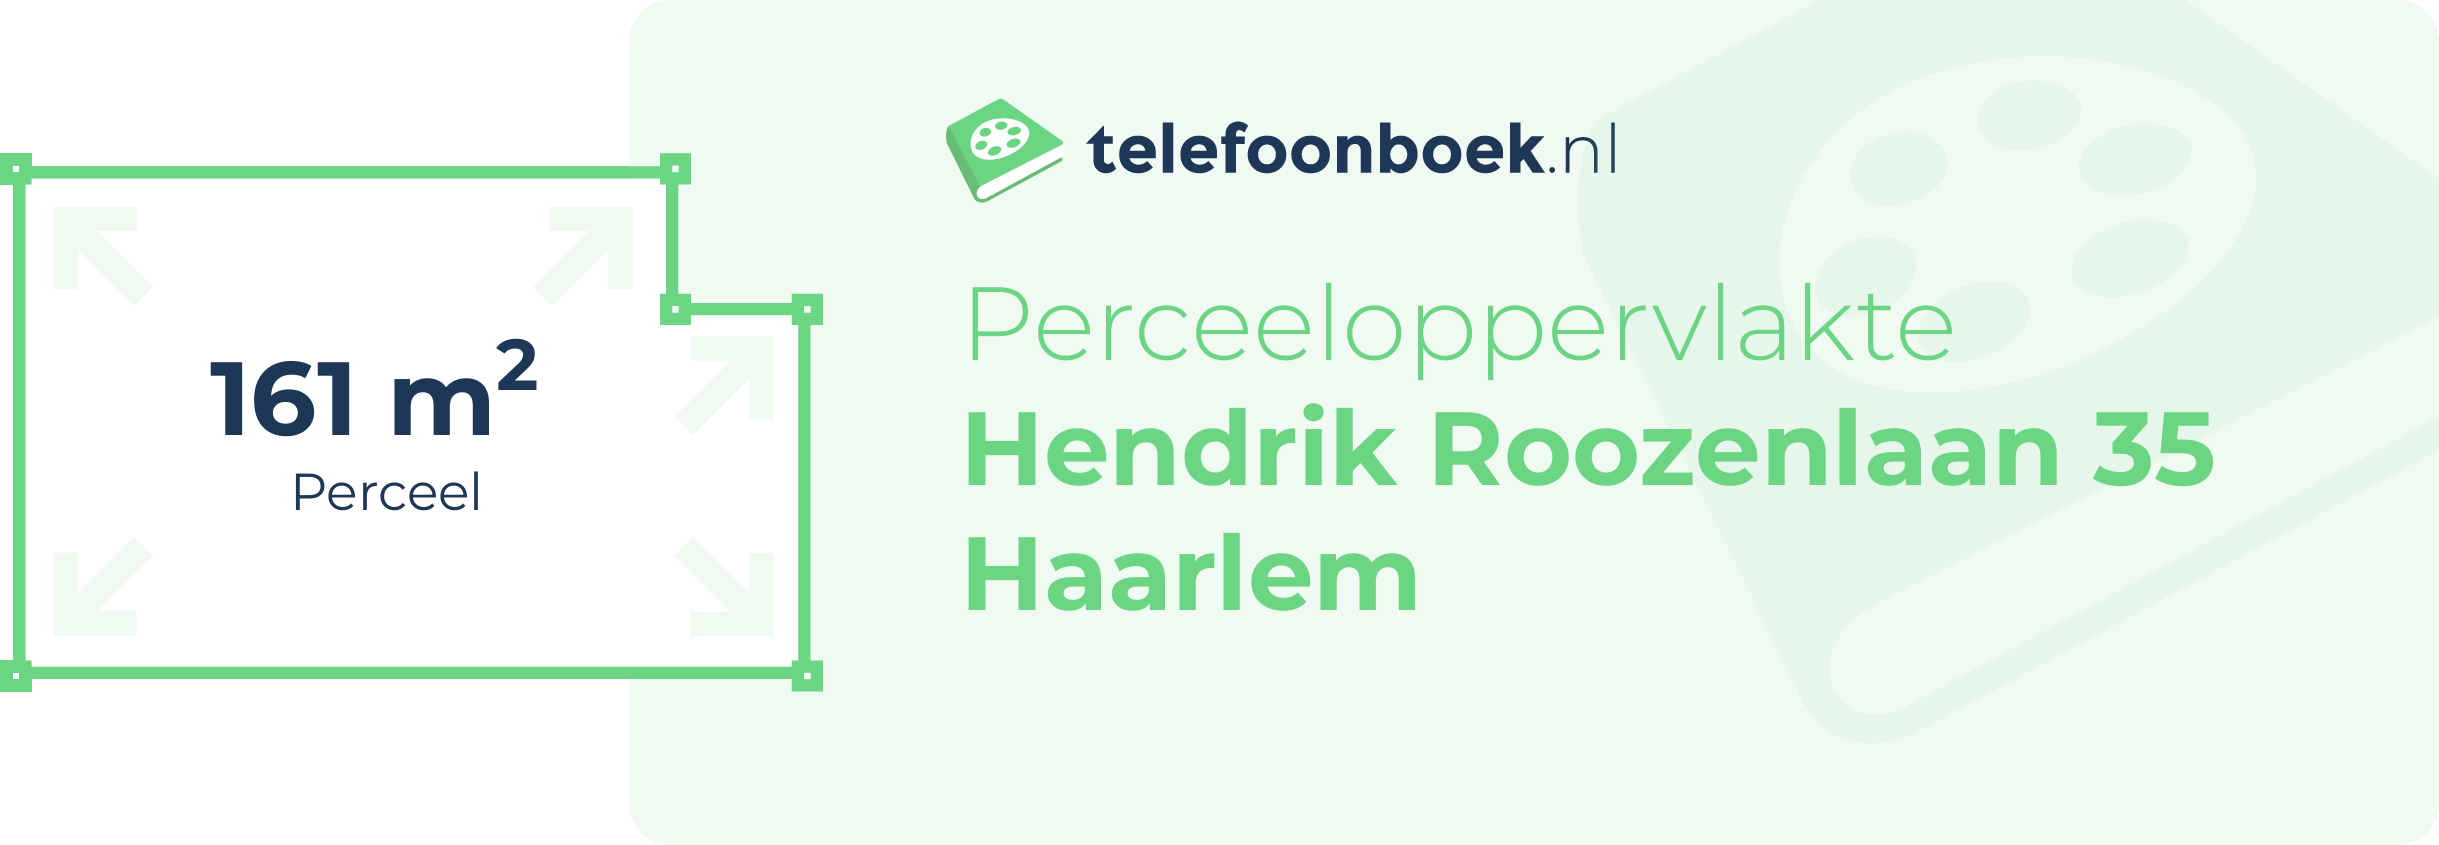 Perceeloppervlakte Hendrik Roozenlaan 35 Haarlem